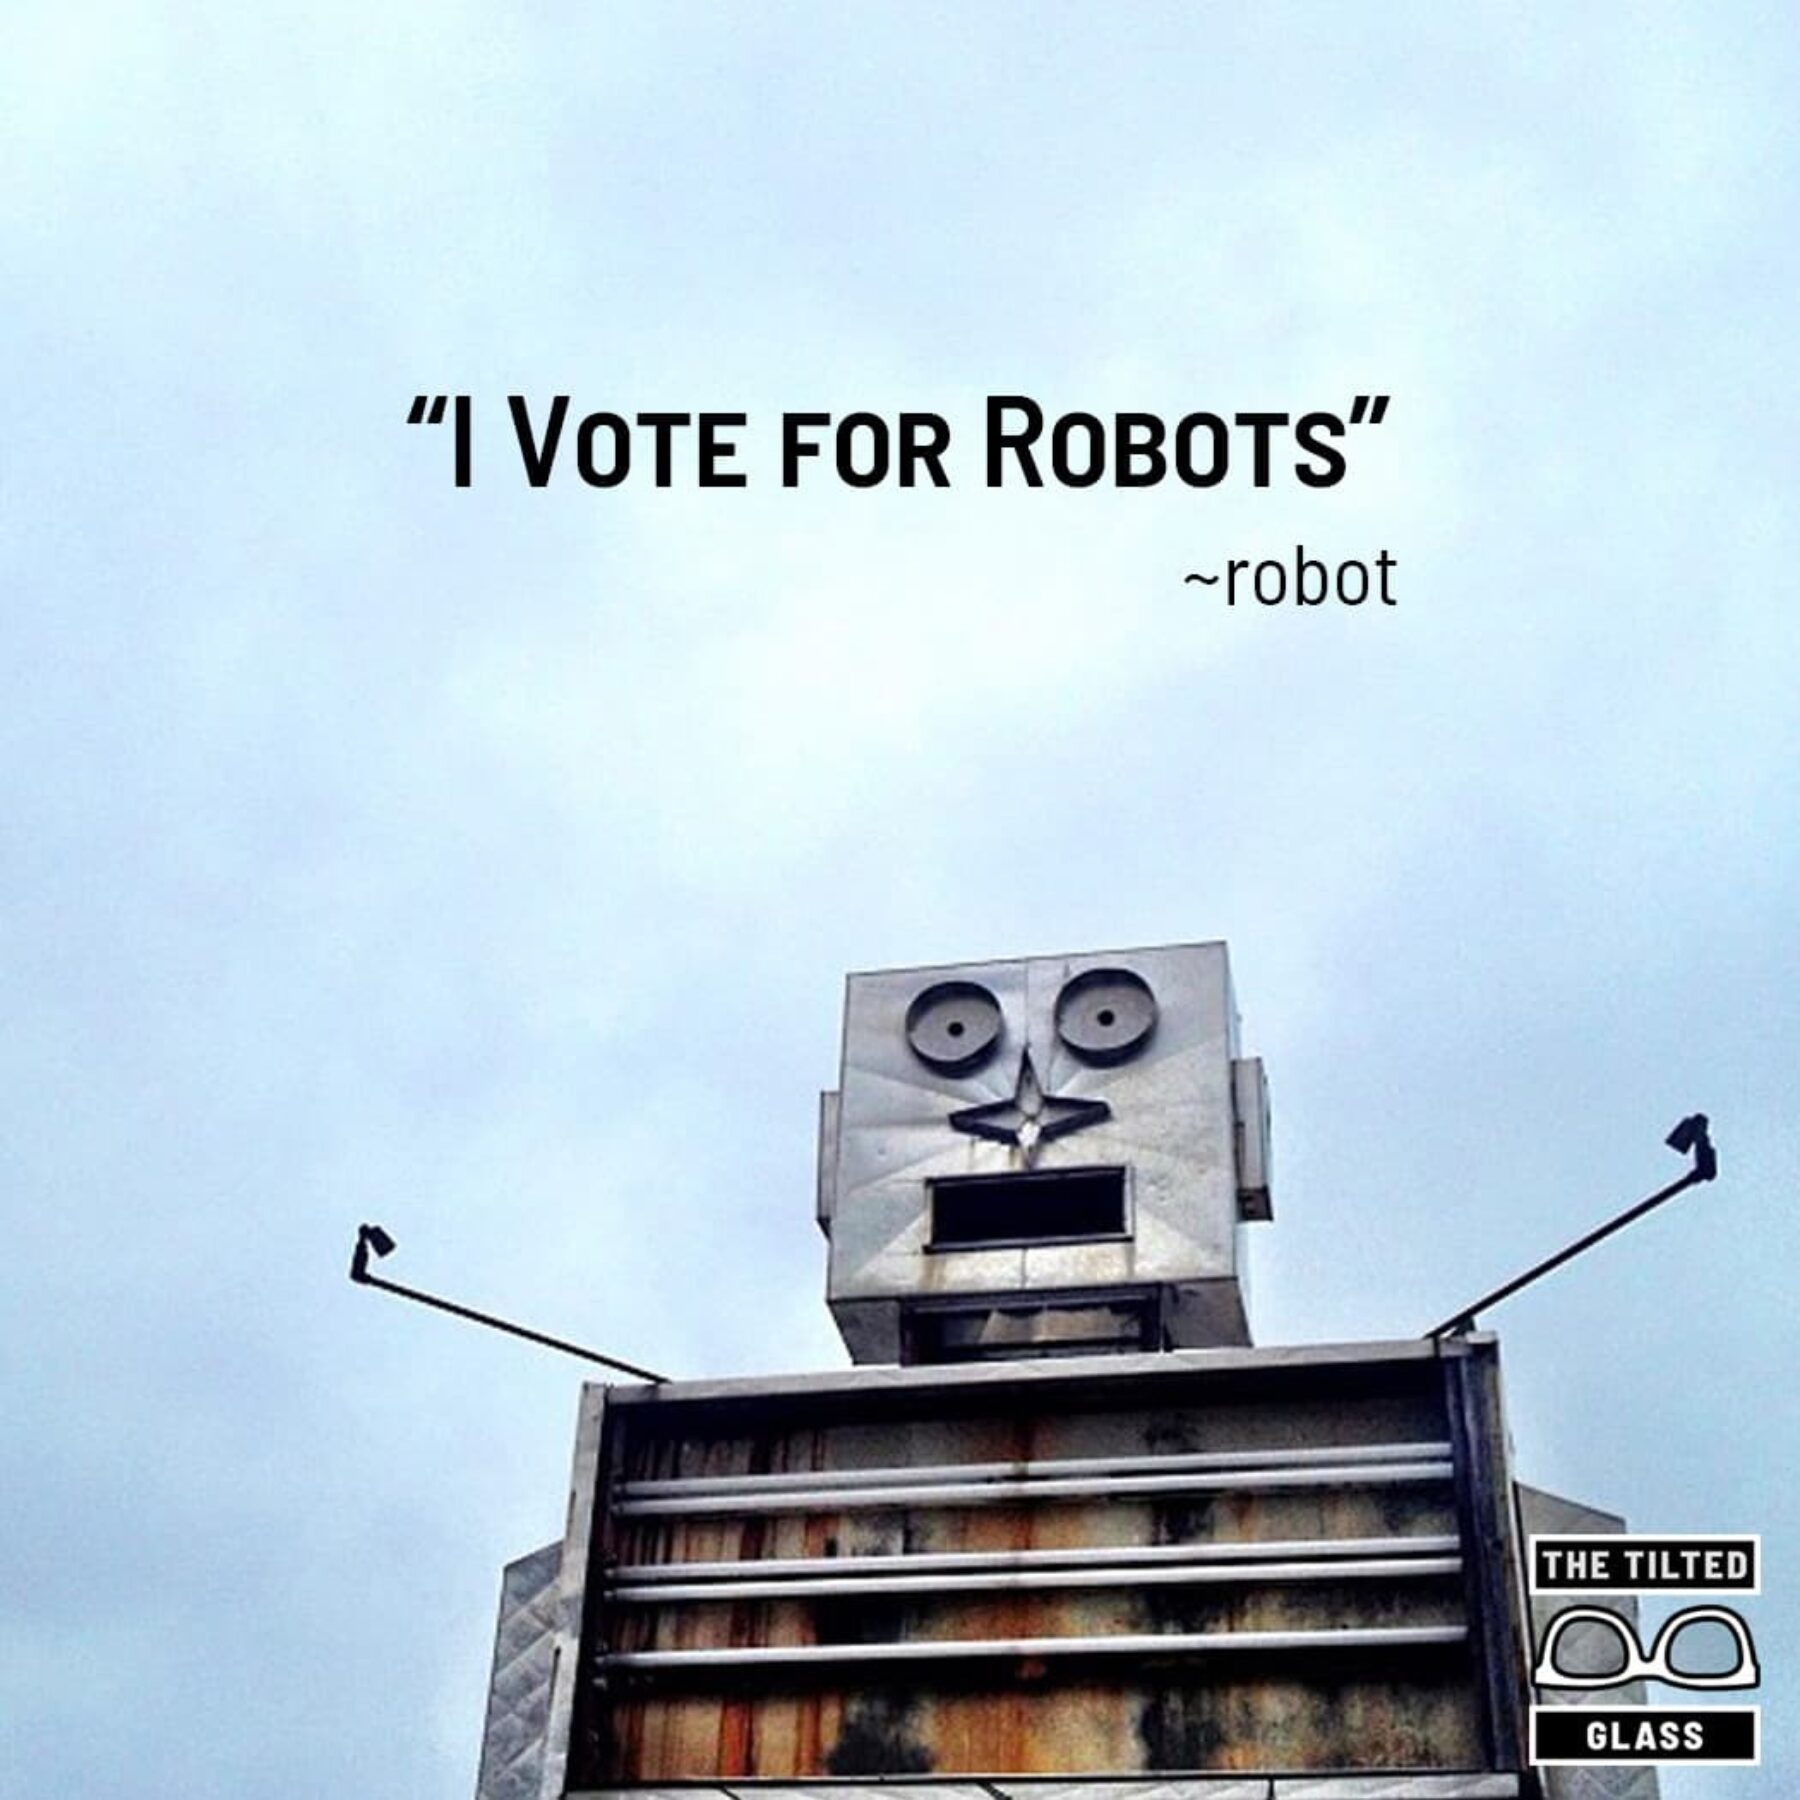 "I Vote for Robots" says robot